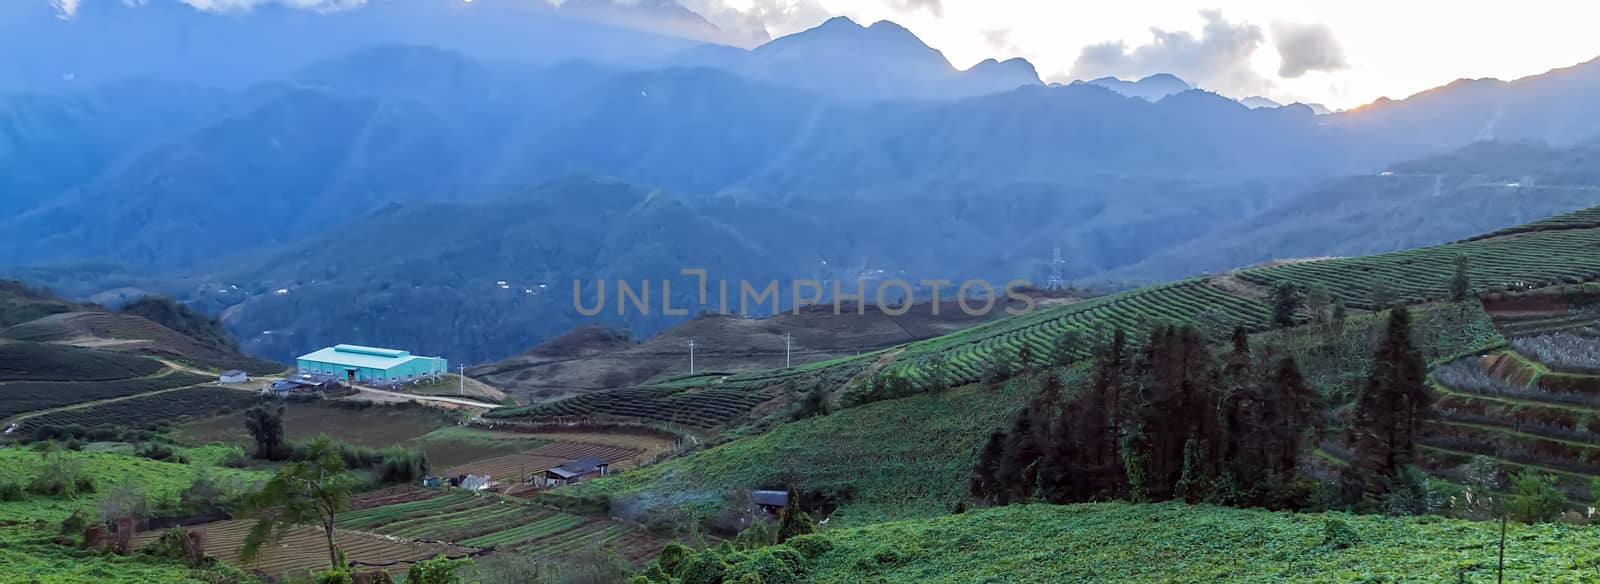 Rice green terrace on fog sunset mountain Vietnam. Rural view farmland and healthy livestock Yen Bai Province, North Vietnam